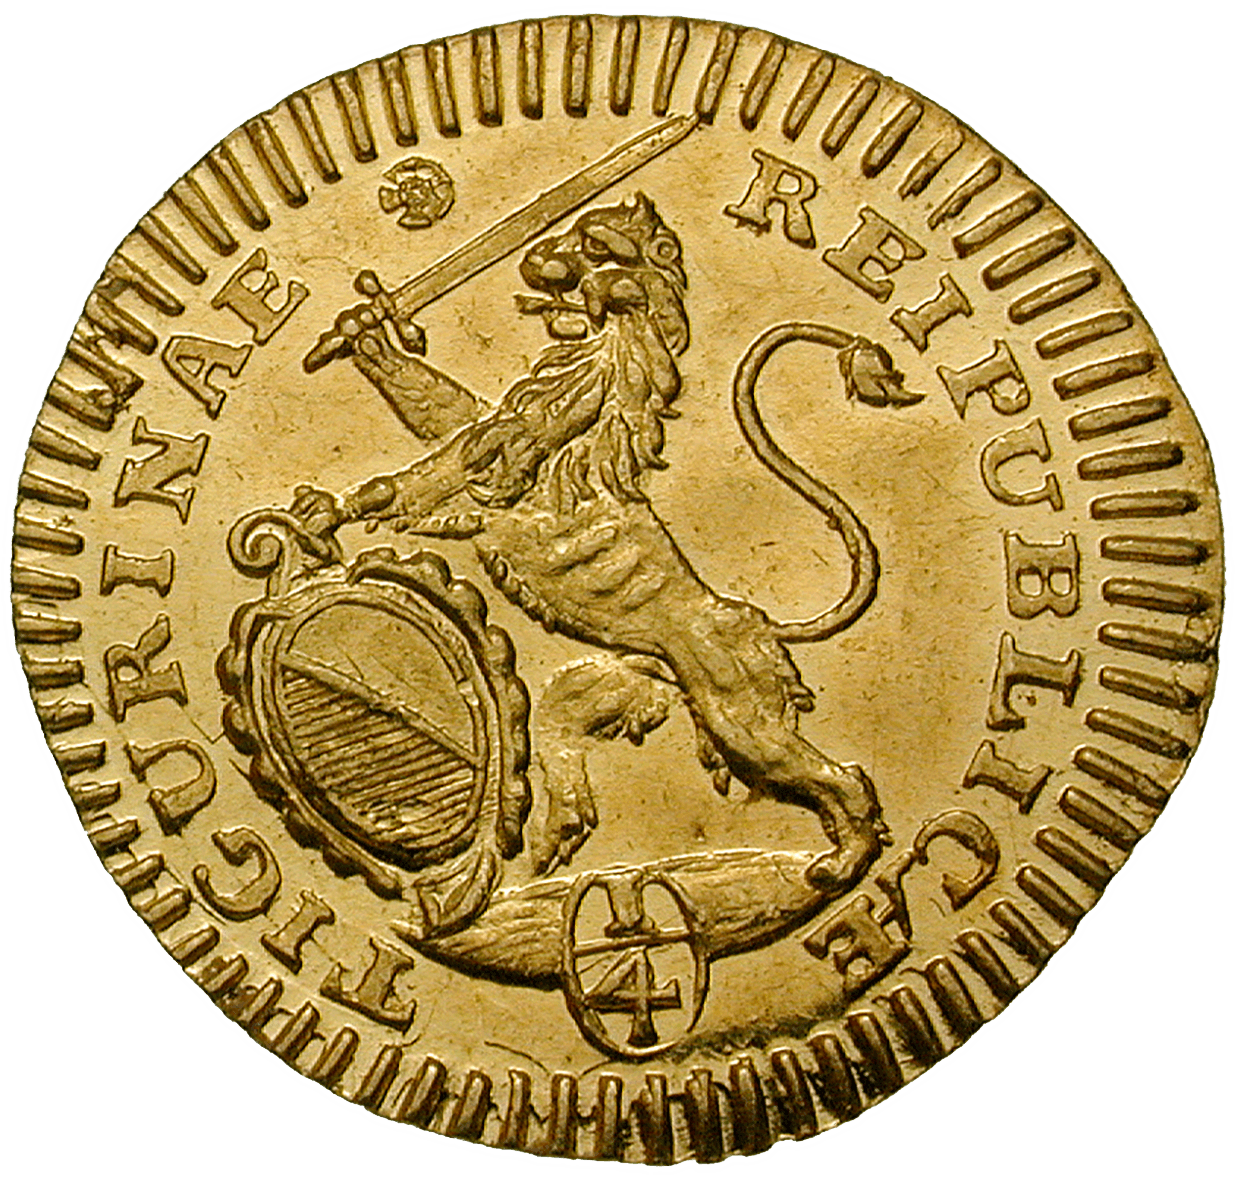 Republic of Zurich, 1/4 Ducat 1721 (obverse)